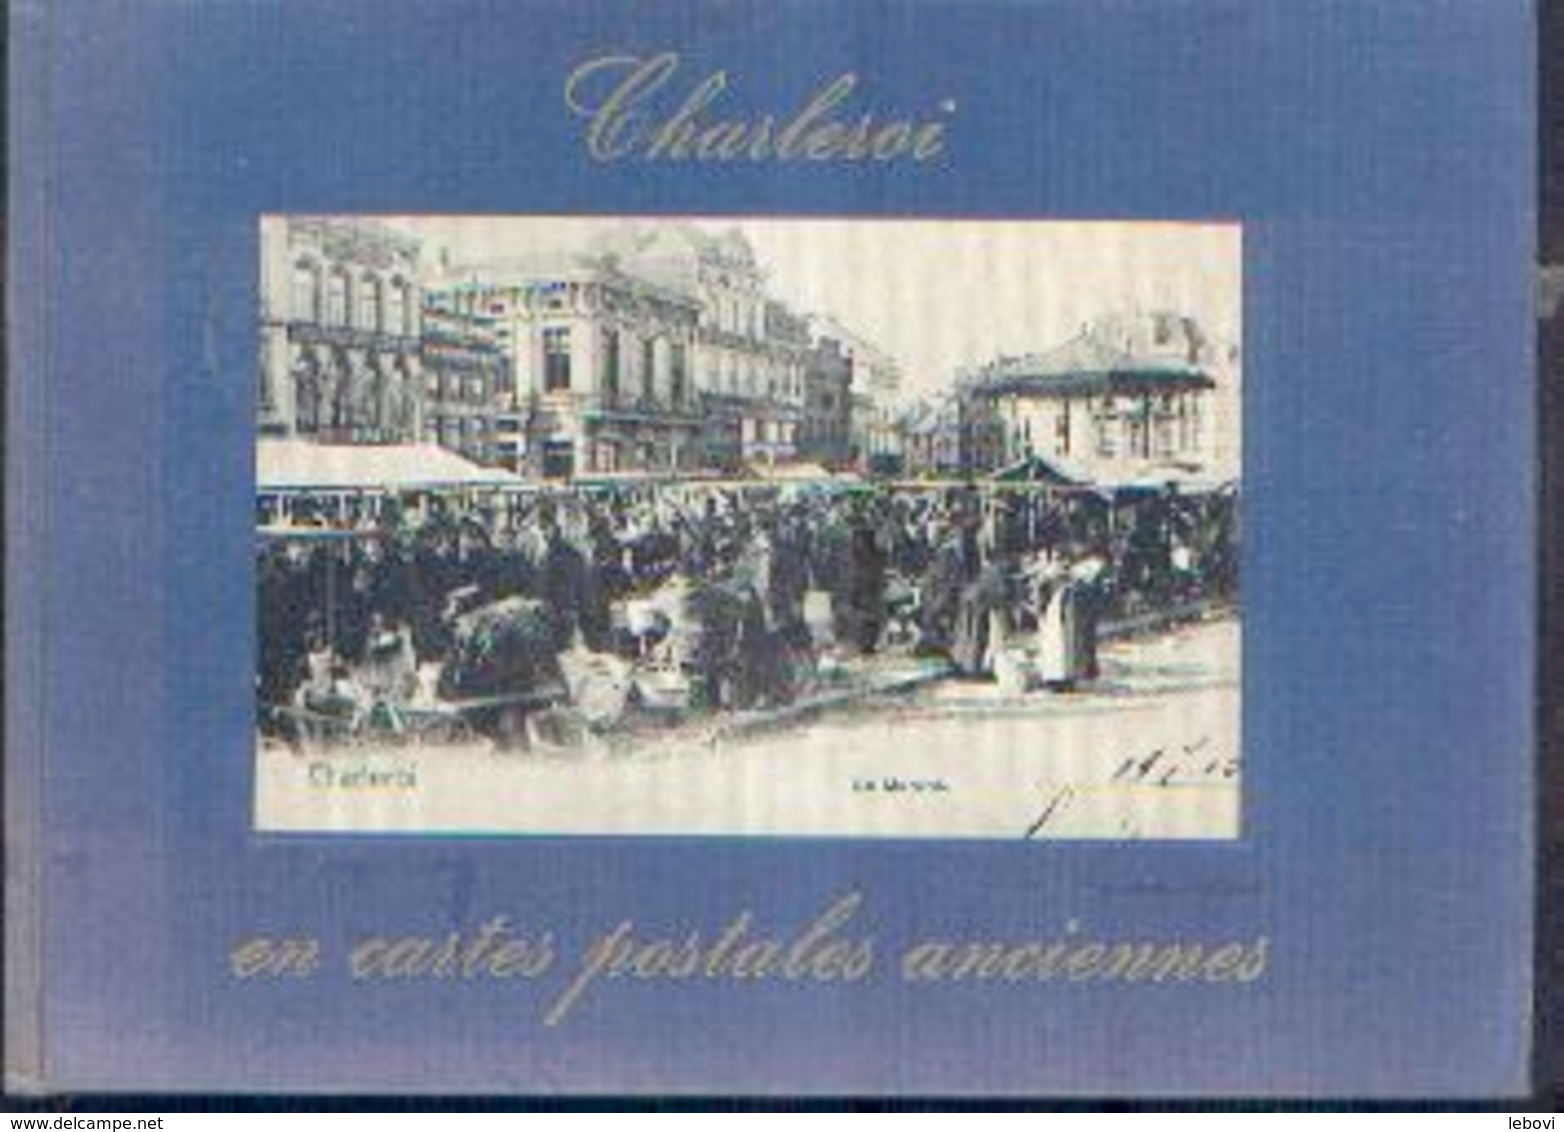 "CHARLROI En Cartes Postales Anciennes » SAMAIN, E. – Ed. Europese Bibliotheek, Zaltbommel (Nl) (1972) - Charleroi